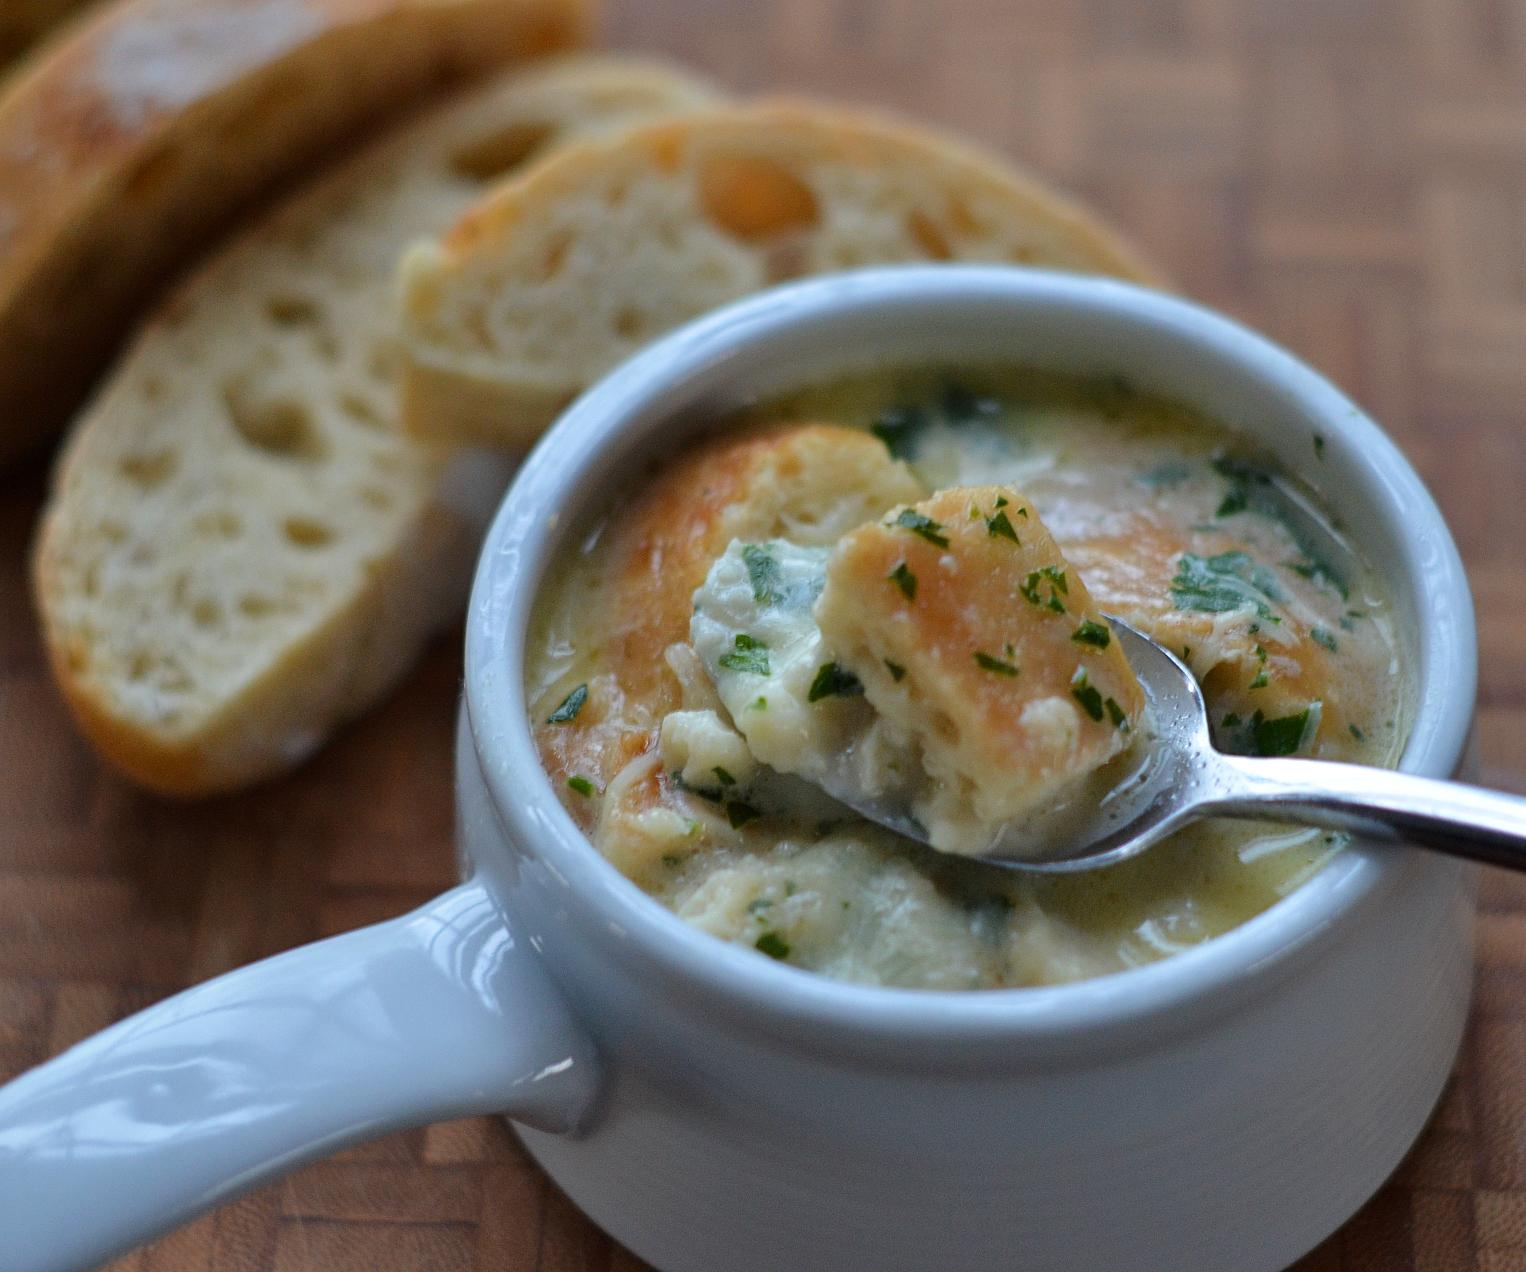 Garlic Bread Soup.jpg